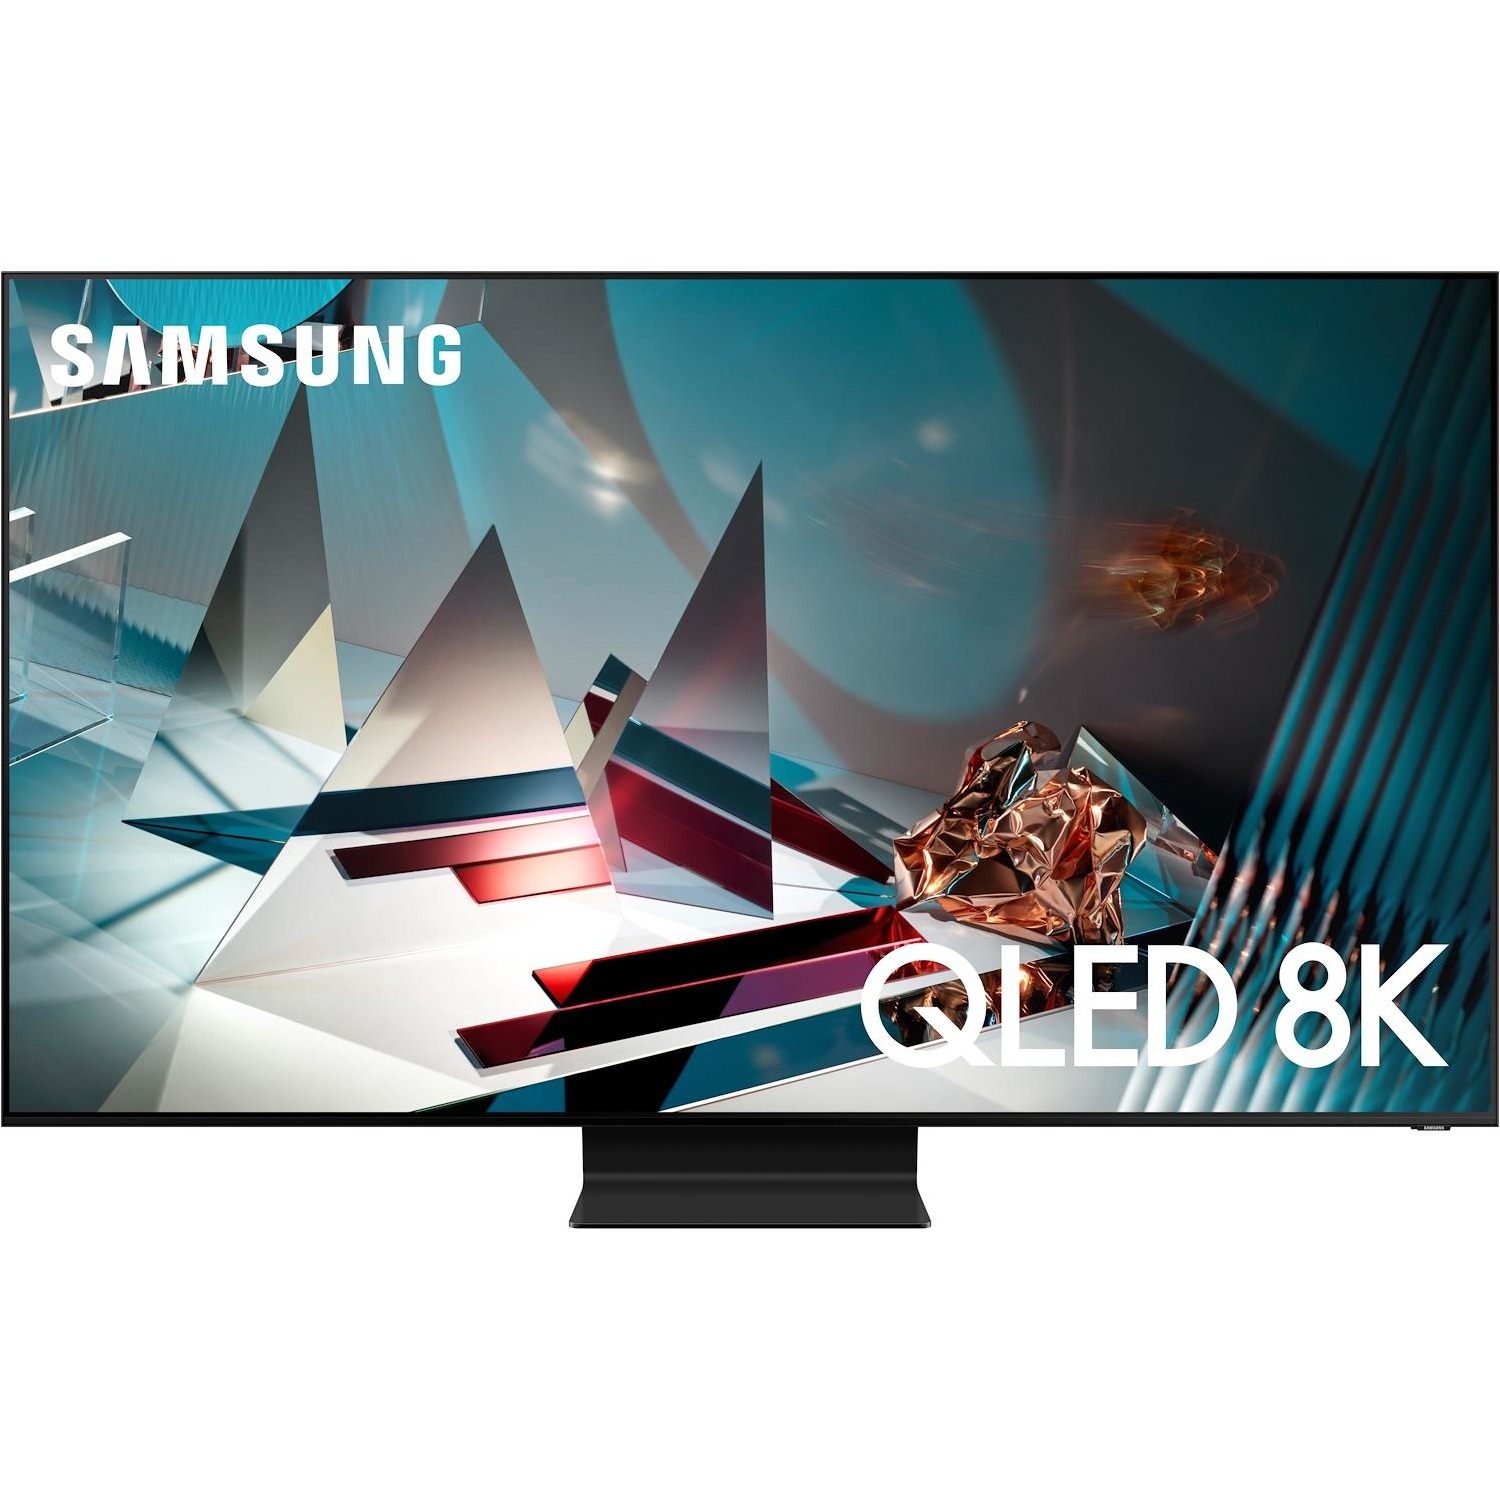 Immagine per TV LED Smart 8K Samsung 65Q800T da DIMOStore